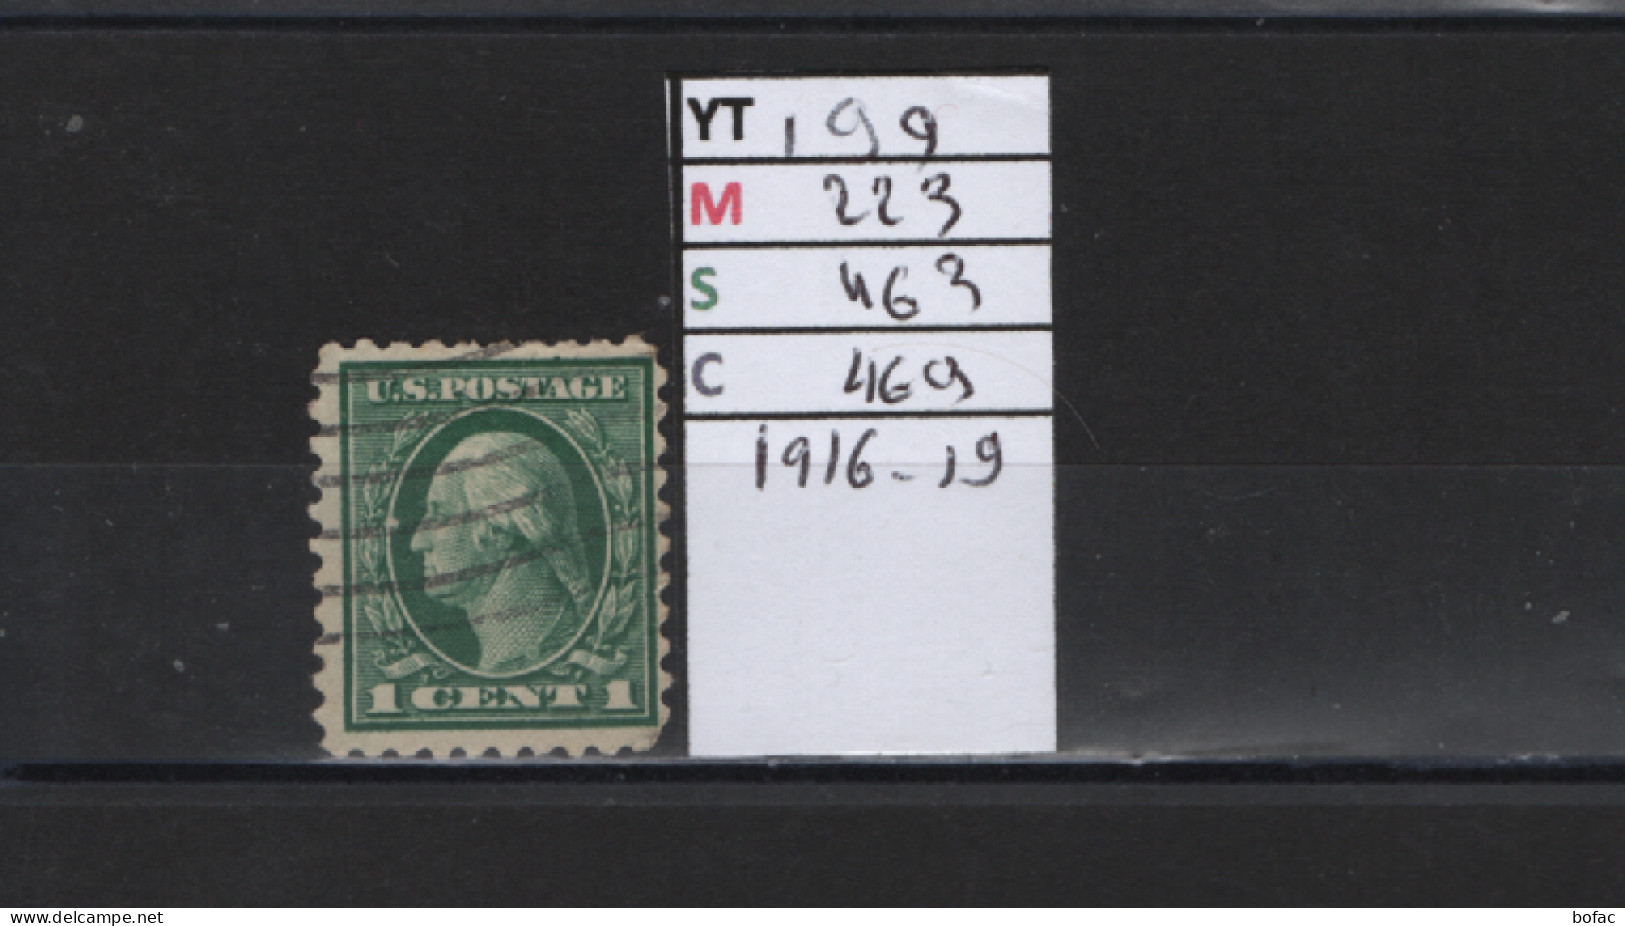 PRIX FIXE Obl 199 YT 223 MIC US463 SCO US469 GIB Washington 1 Cent  1916 Etats Unis 58/06 - Used Stamps